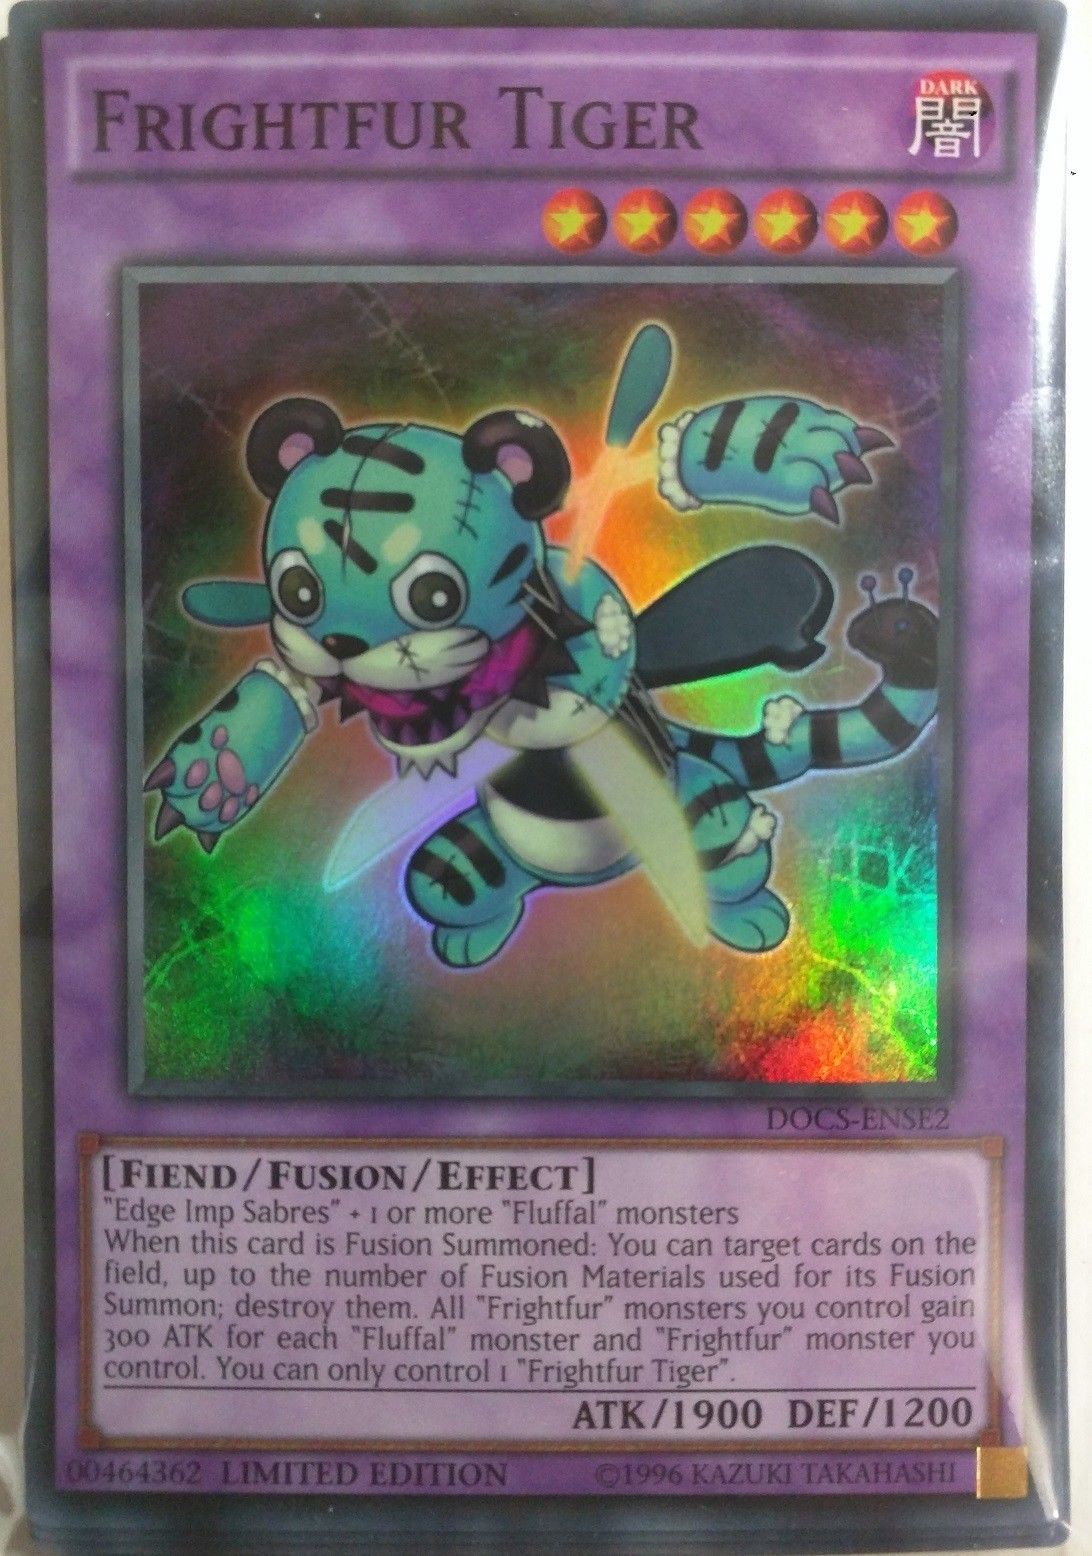 DOCS-ENSE2 Frightfur Tiger YuGiOh Trading Card Super Rare NM Limited Ed